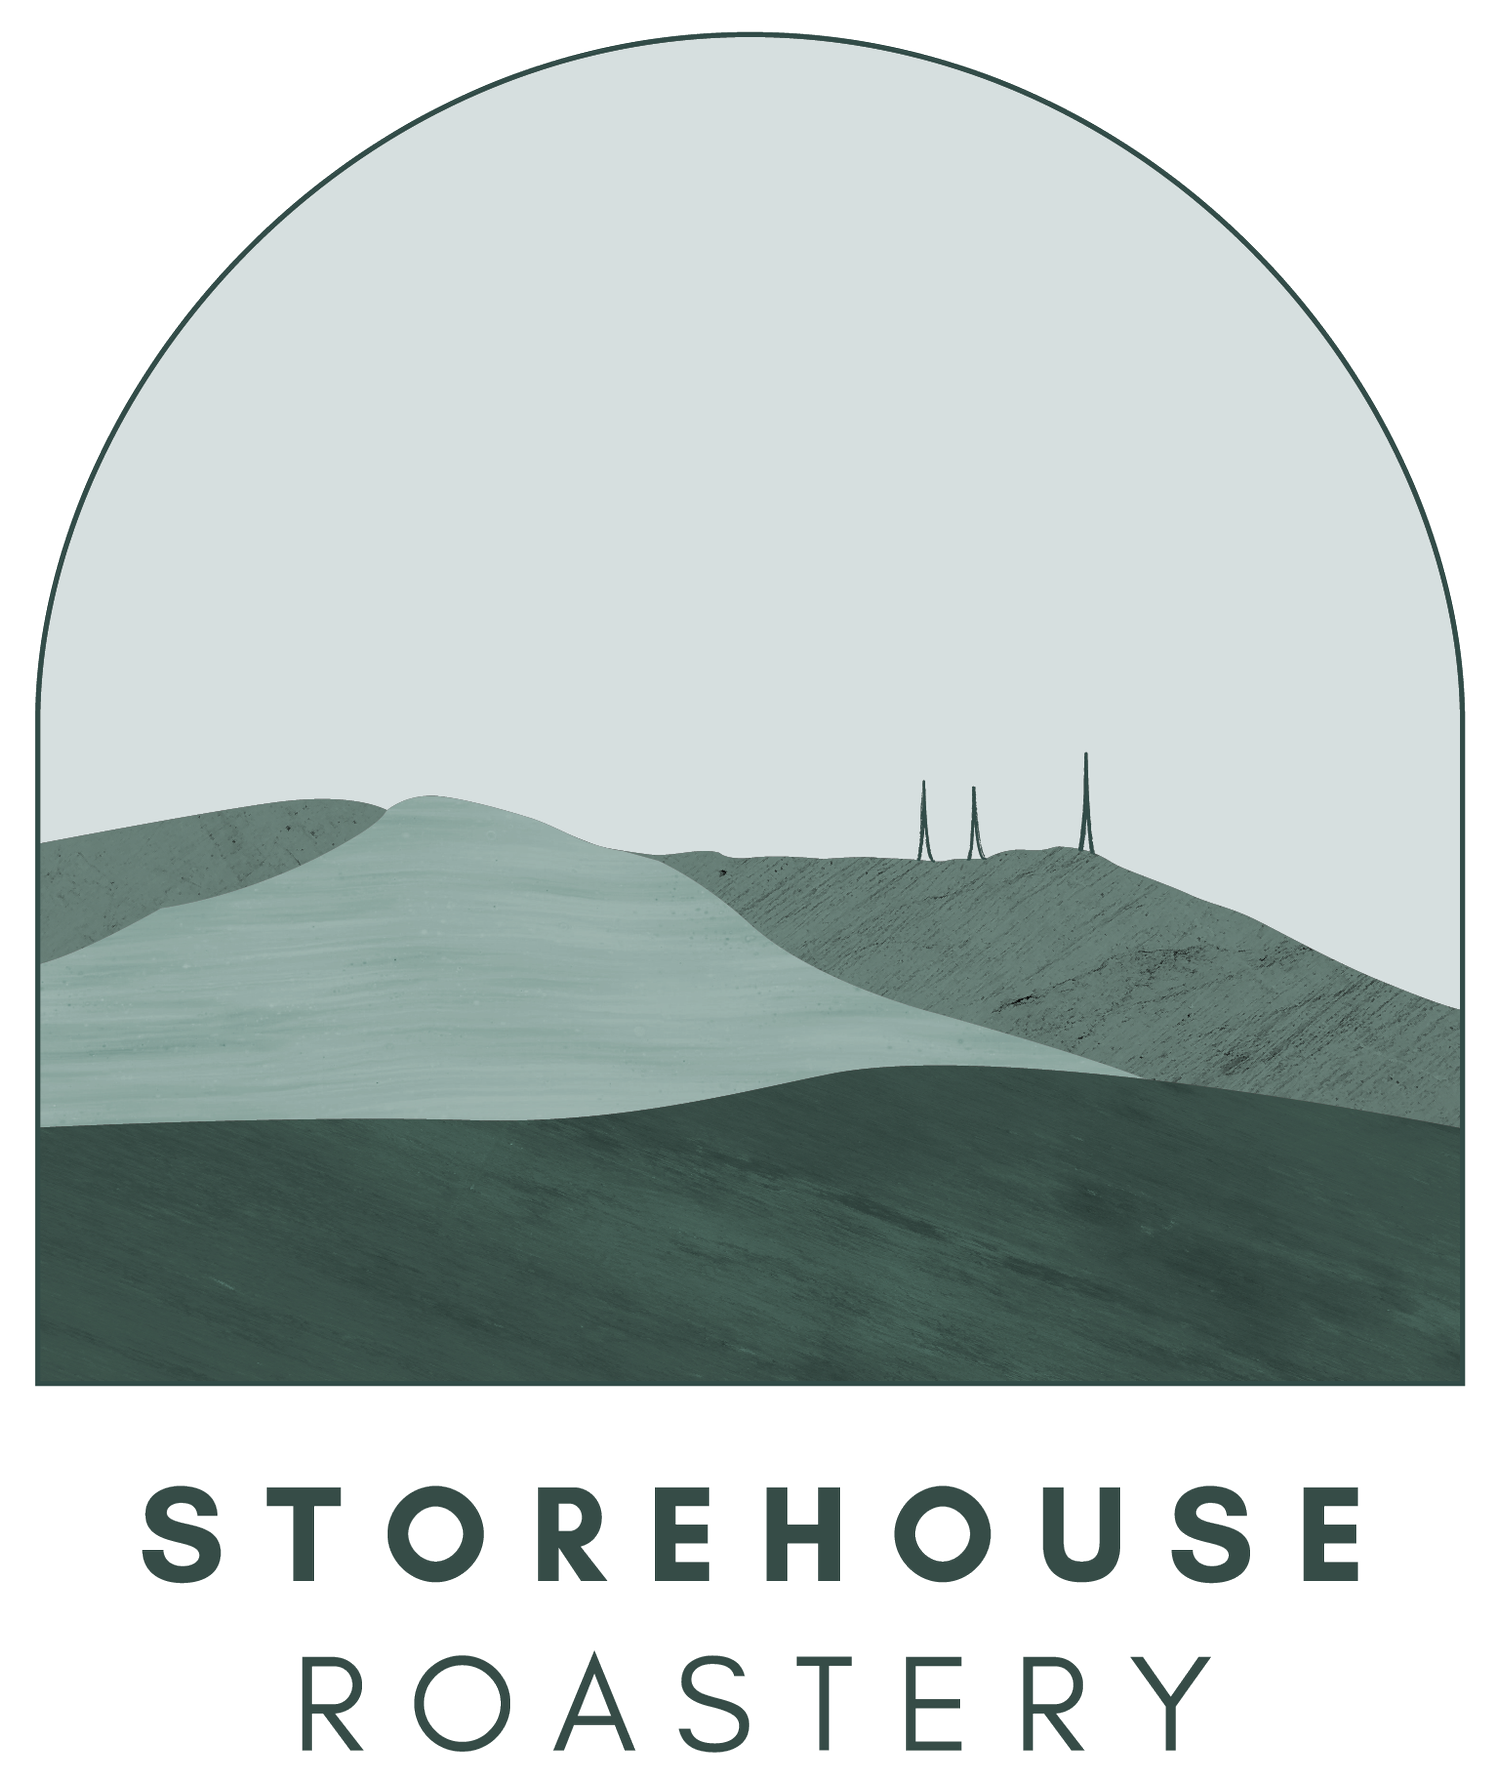 The Storehouse Roastery